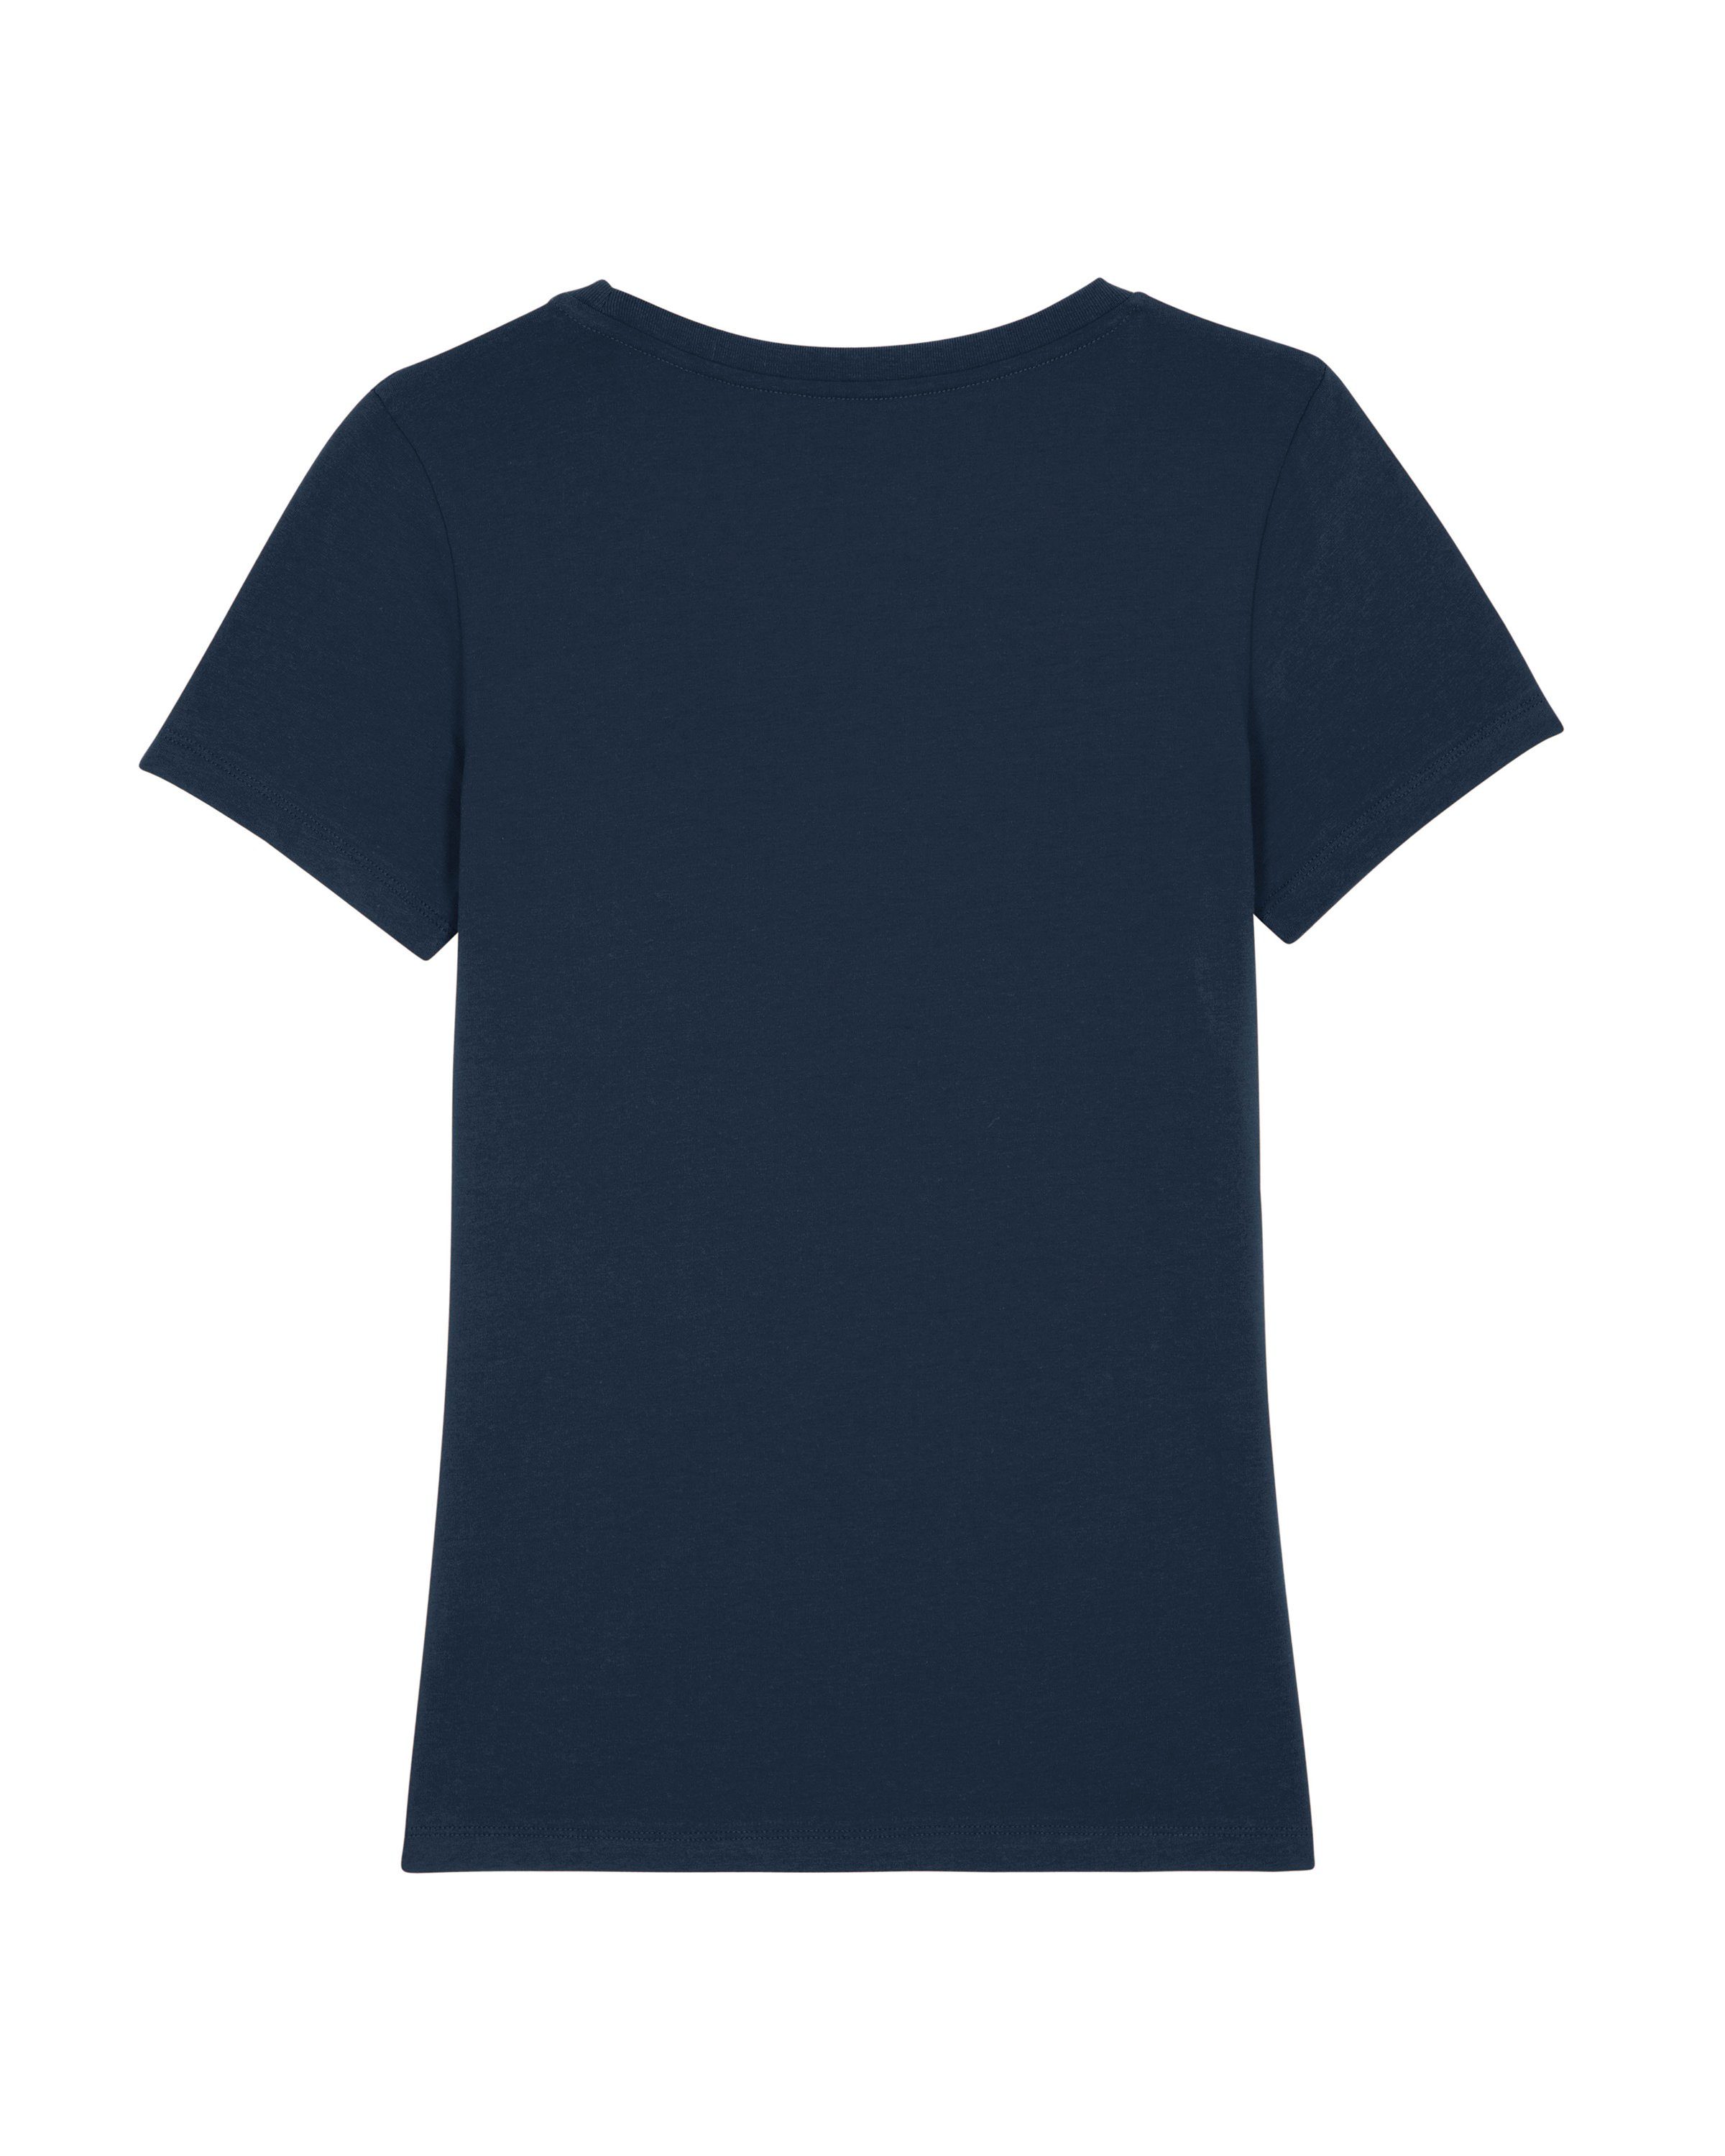 (1-tlg) says dunkelblau Hi Astronaut wat? Apparel Print-Shirt